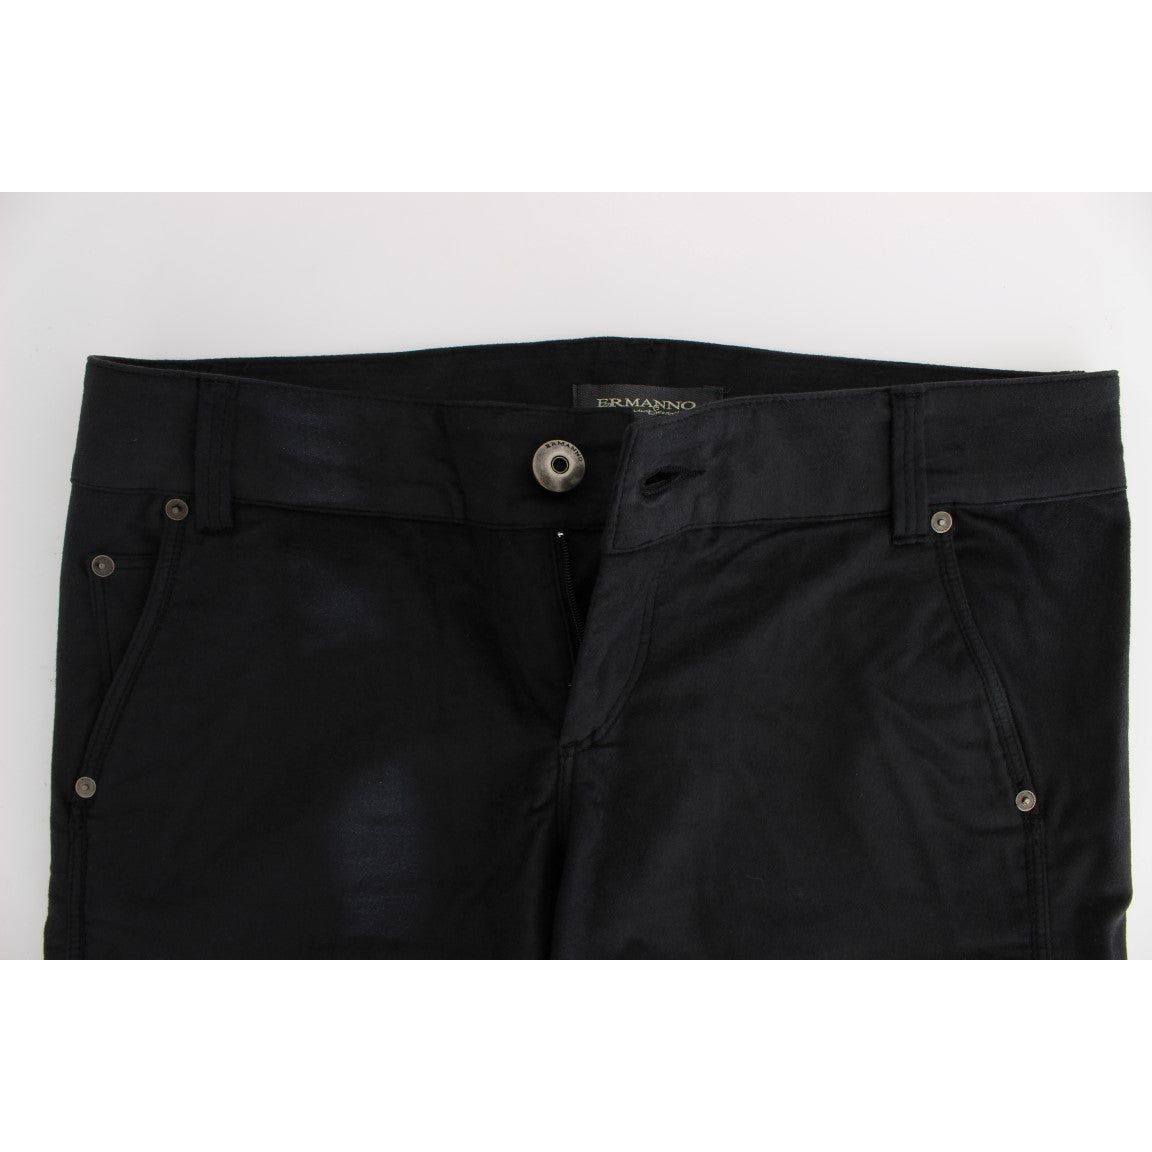 Ermanno Scervino Chic Black Regular Fit Trousers black-cotton-blend-regular-fit-pants Jeans & Pants 330636-black-cotton-blend-regular-fit-pants-4.jpg